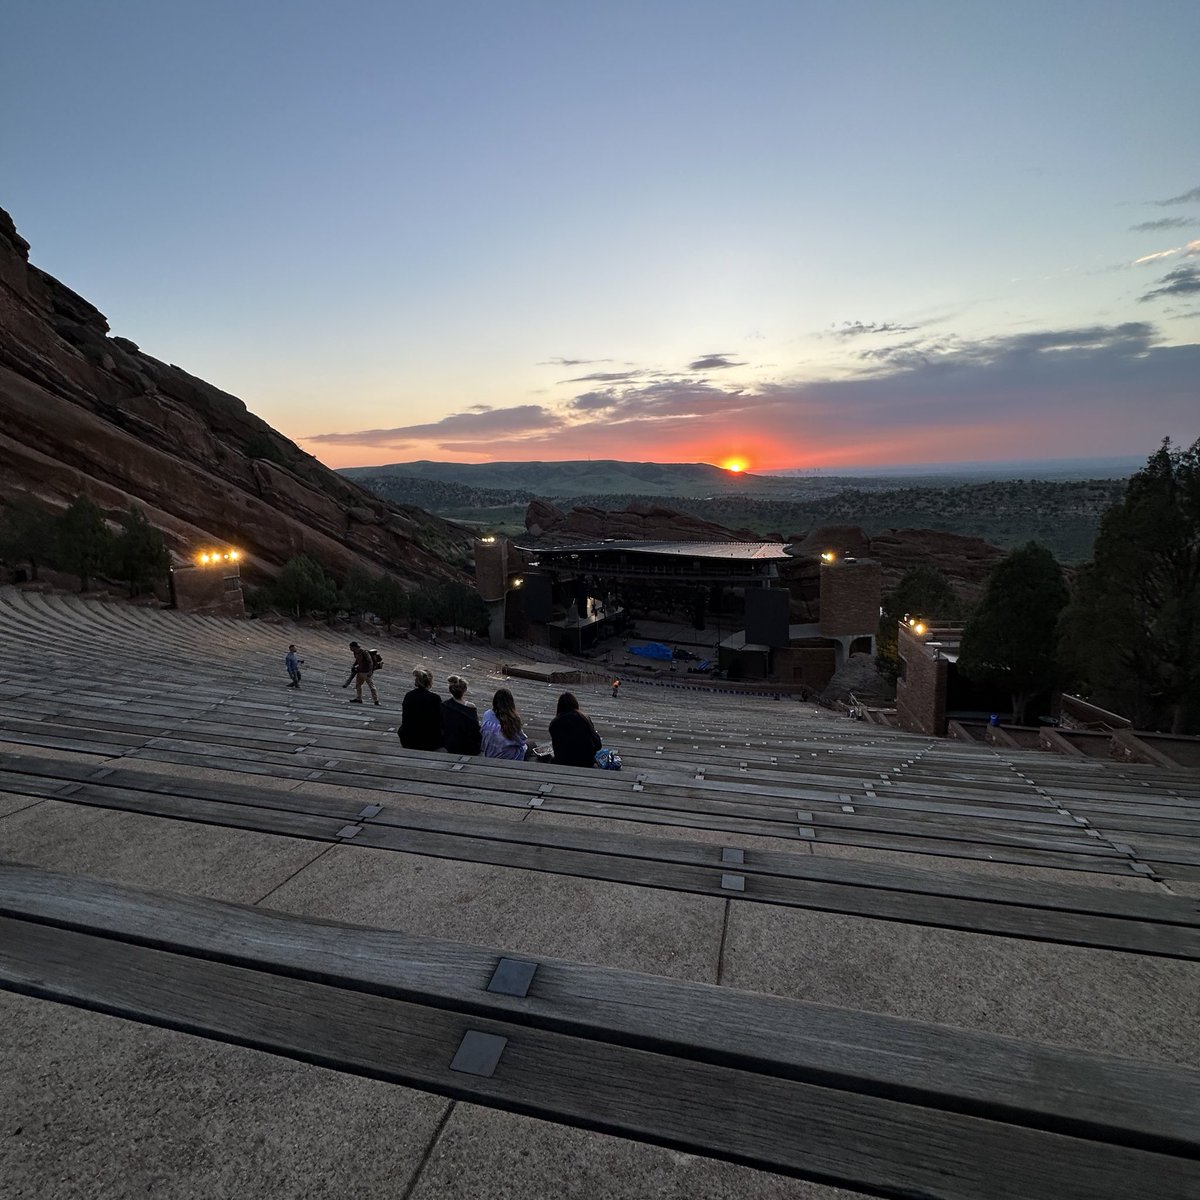 sunrise at red rocks amphitheater